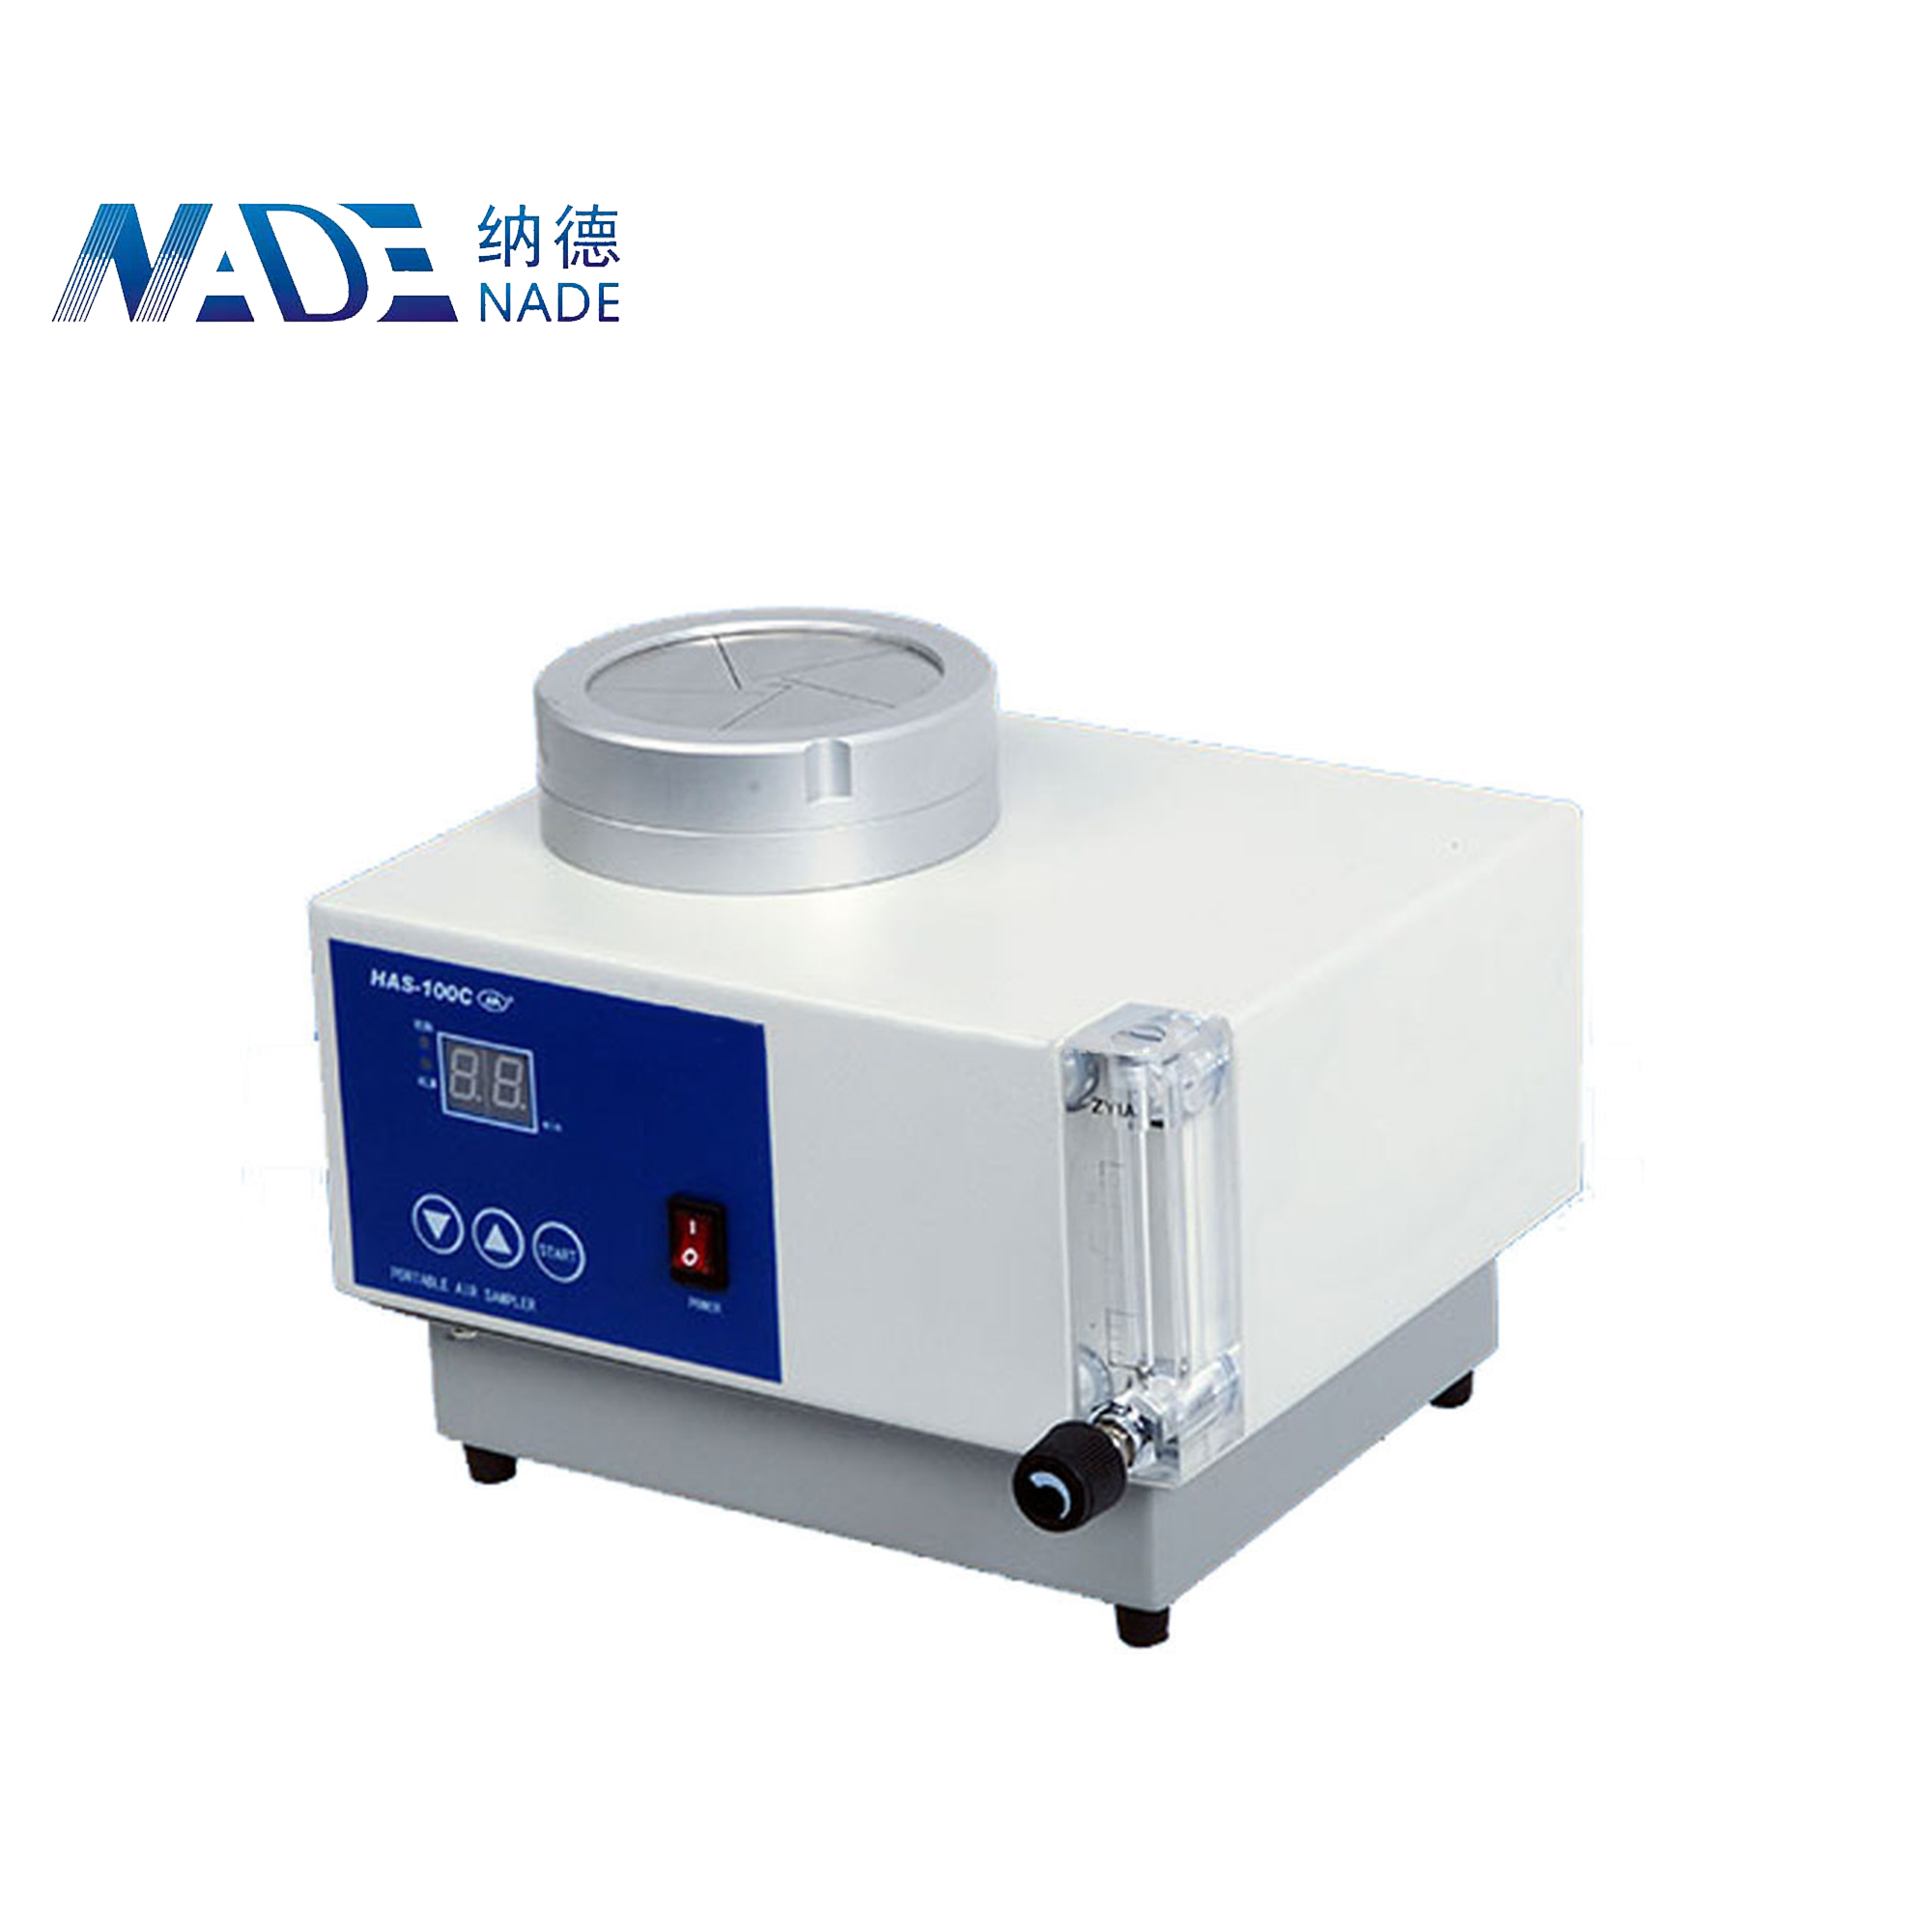 Nade Gas Analyzer Lab Scientific Equipment Air Sampler HAS-100C 28.3L/min